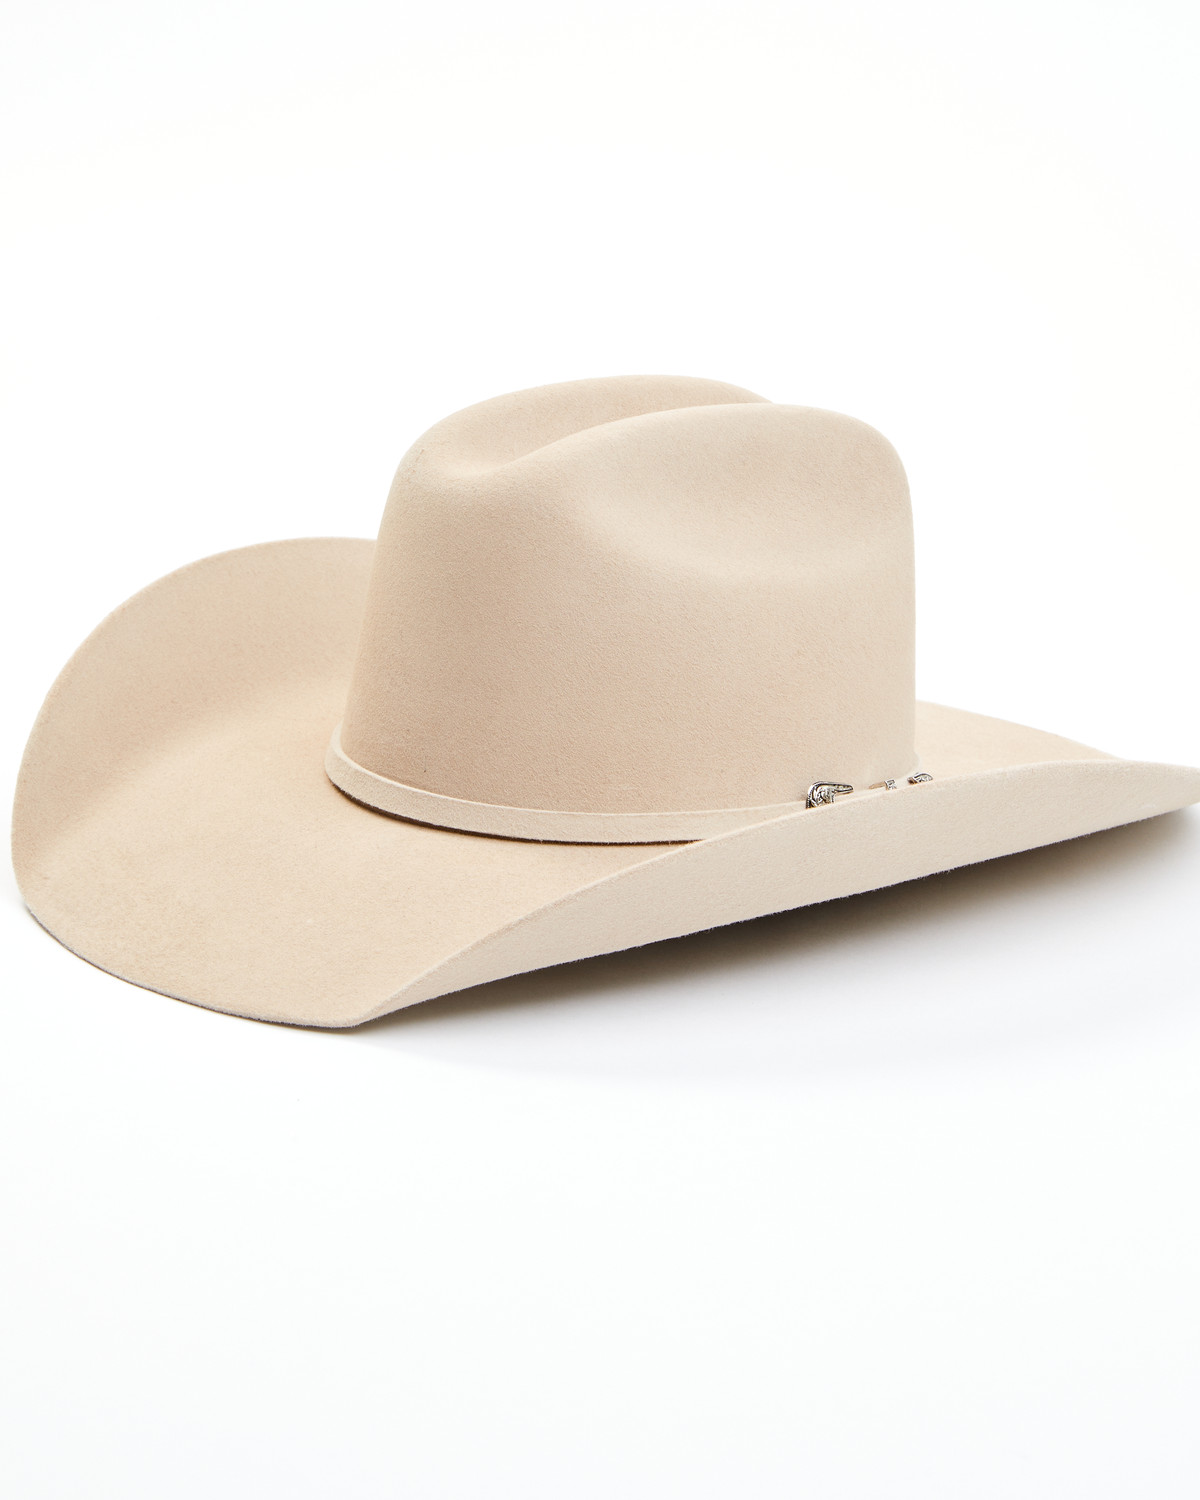 Felt Cowboy Hats